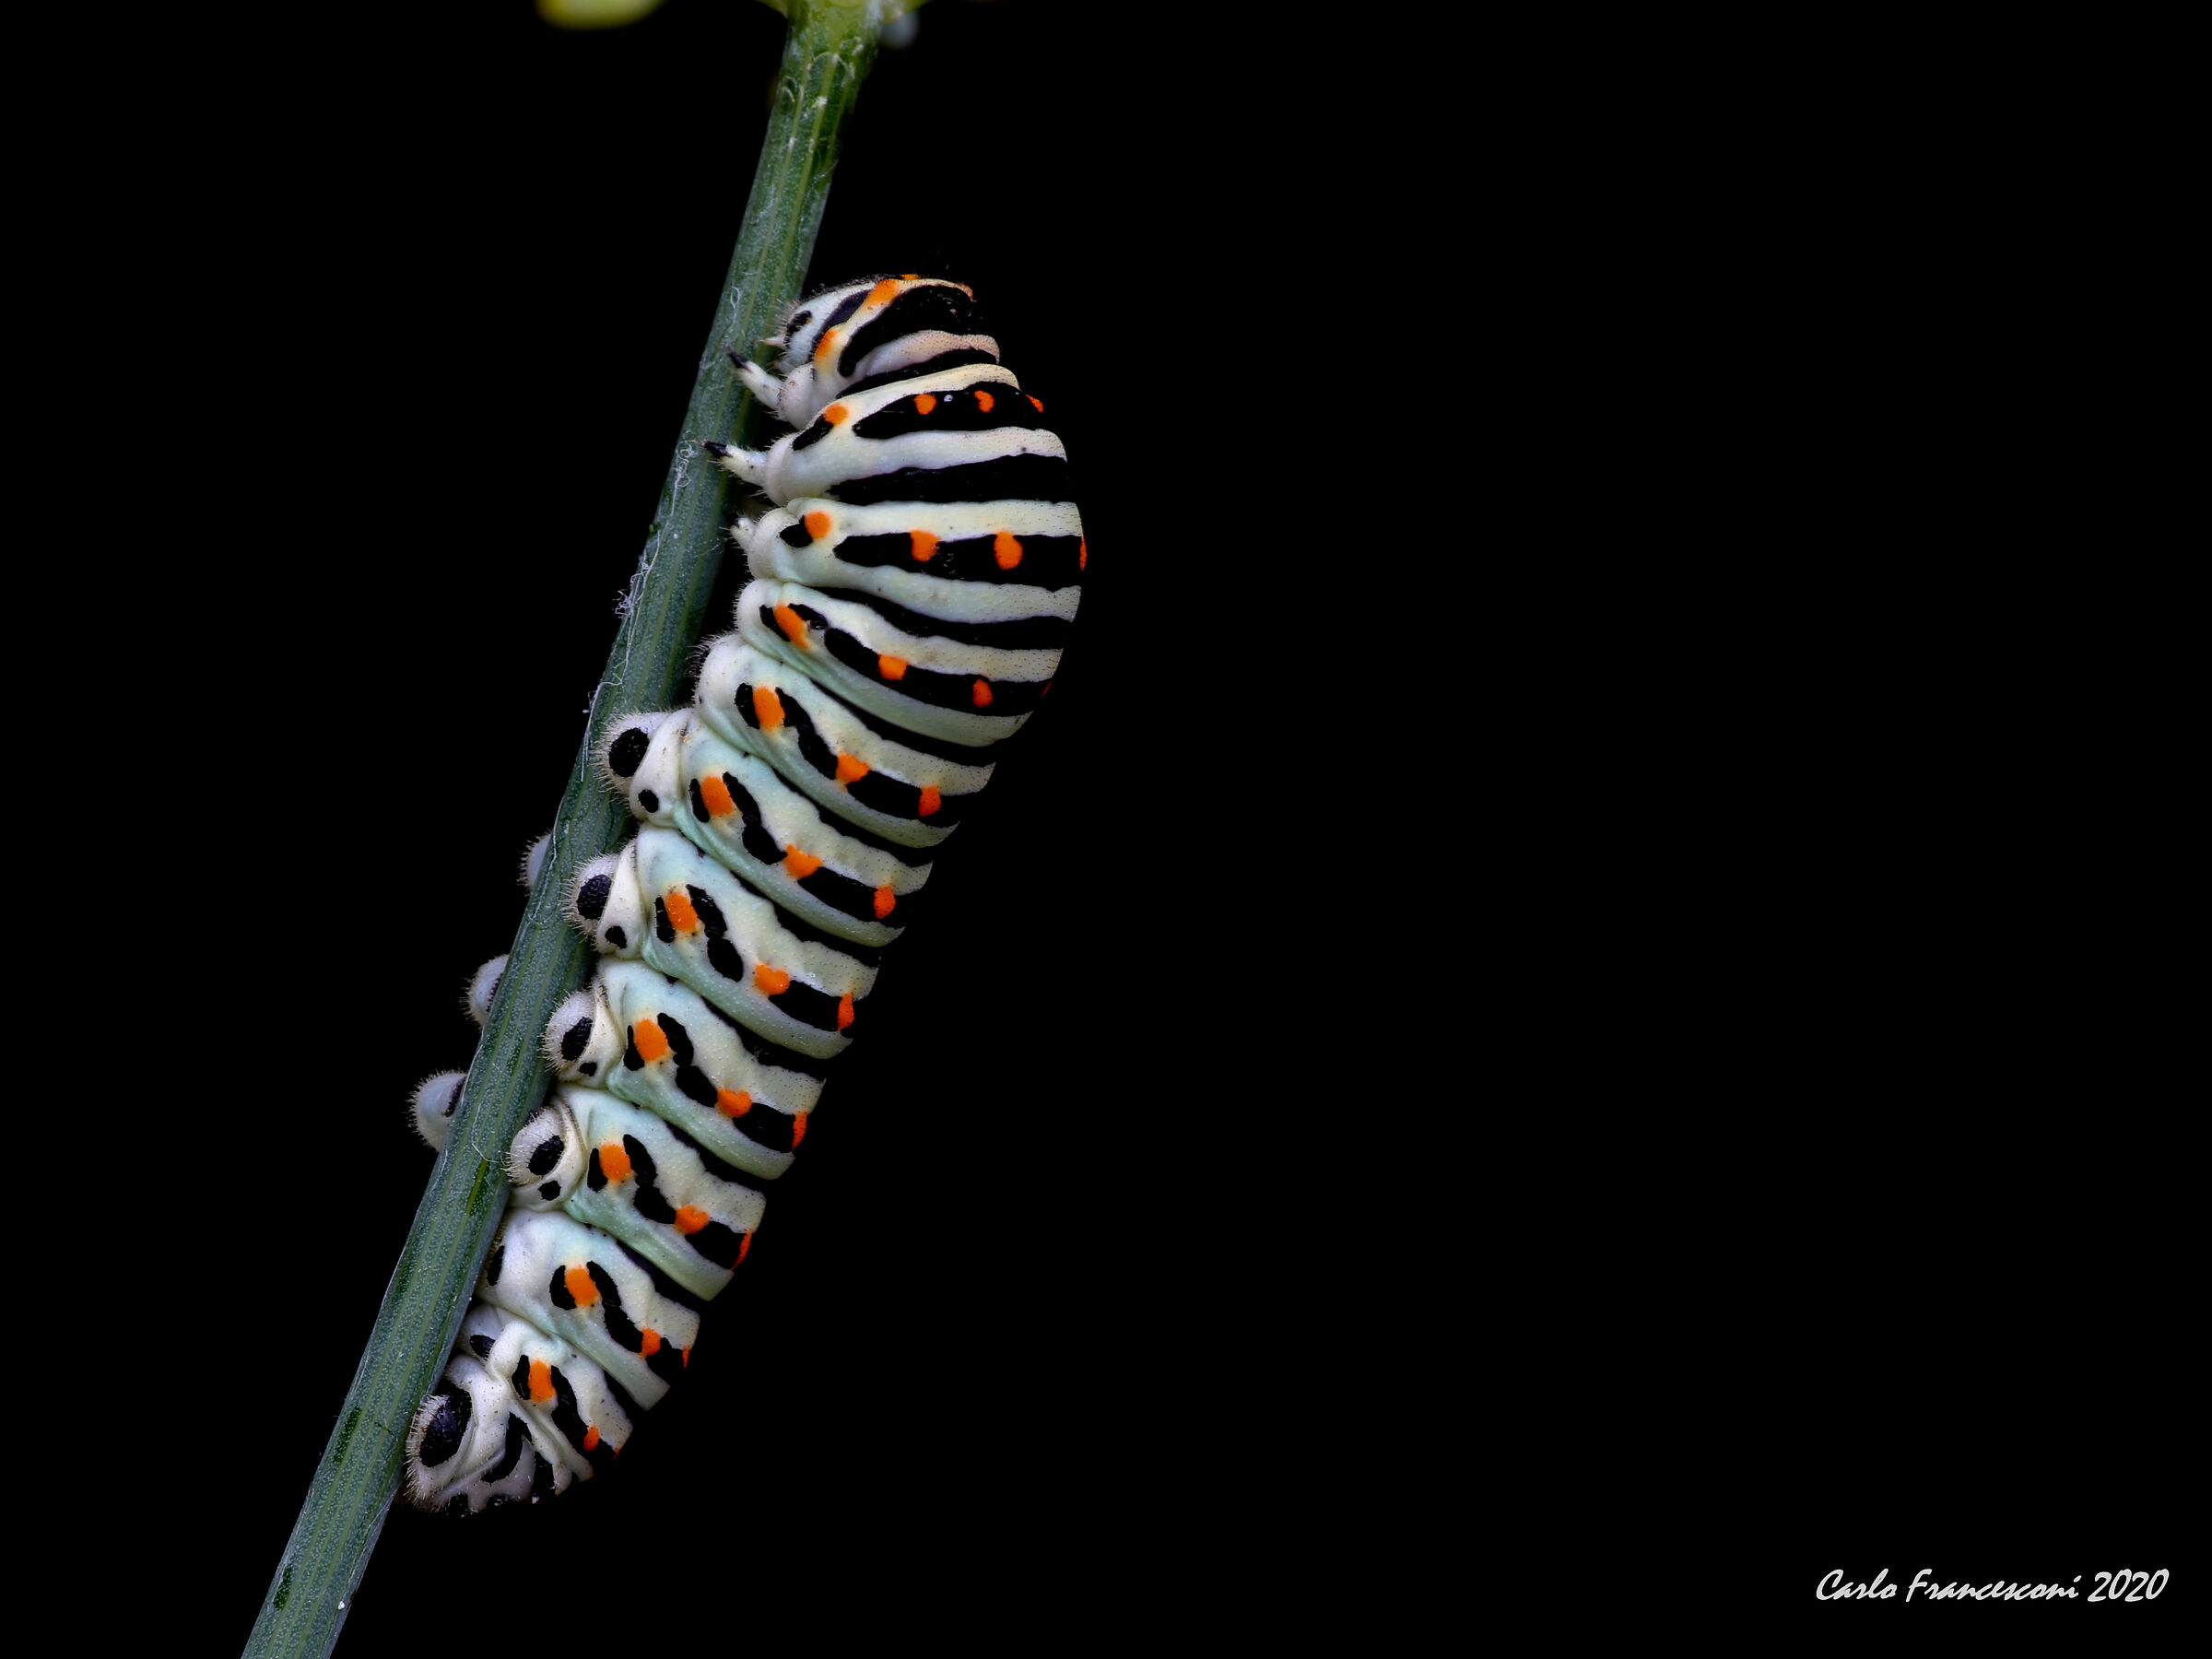 Macaone Caterpillar ...